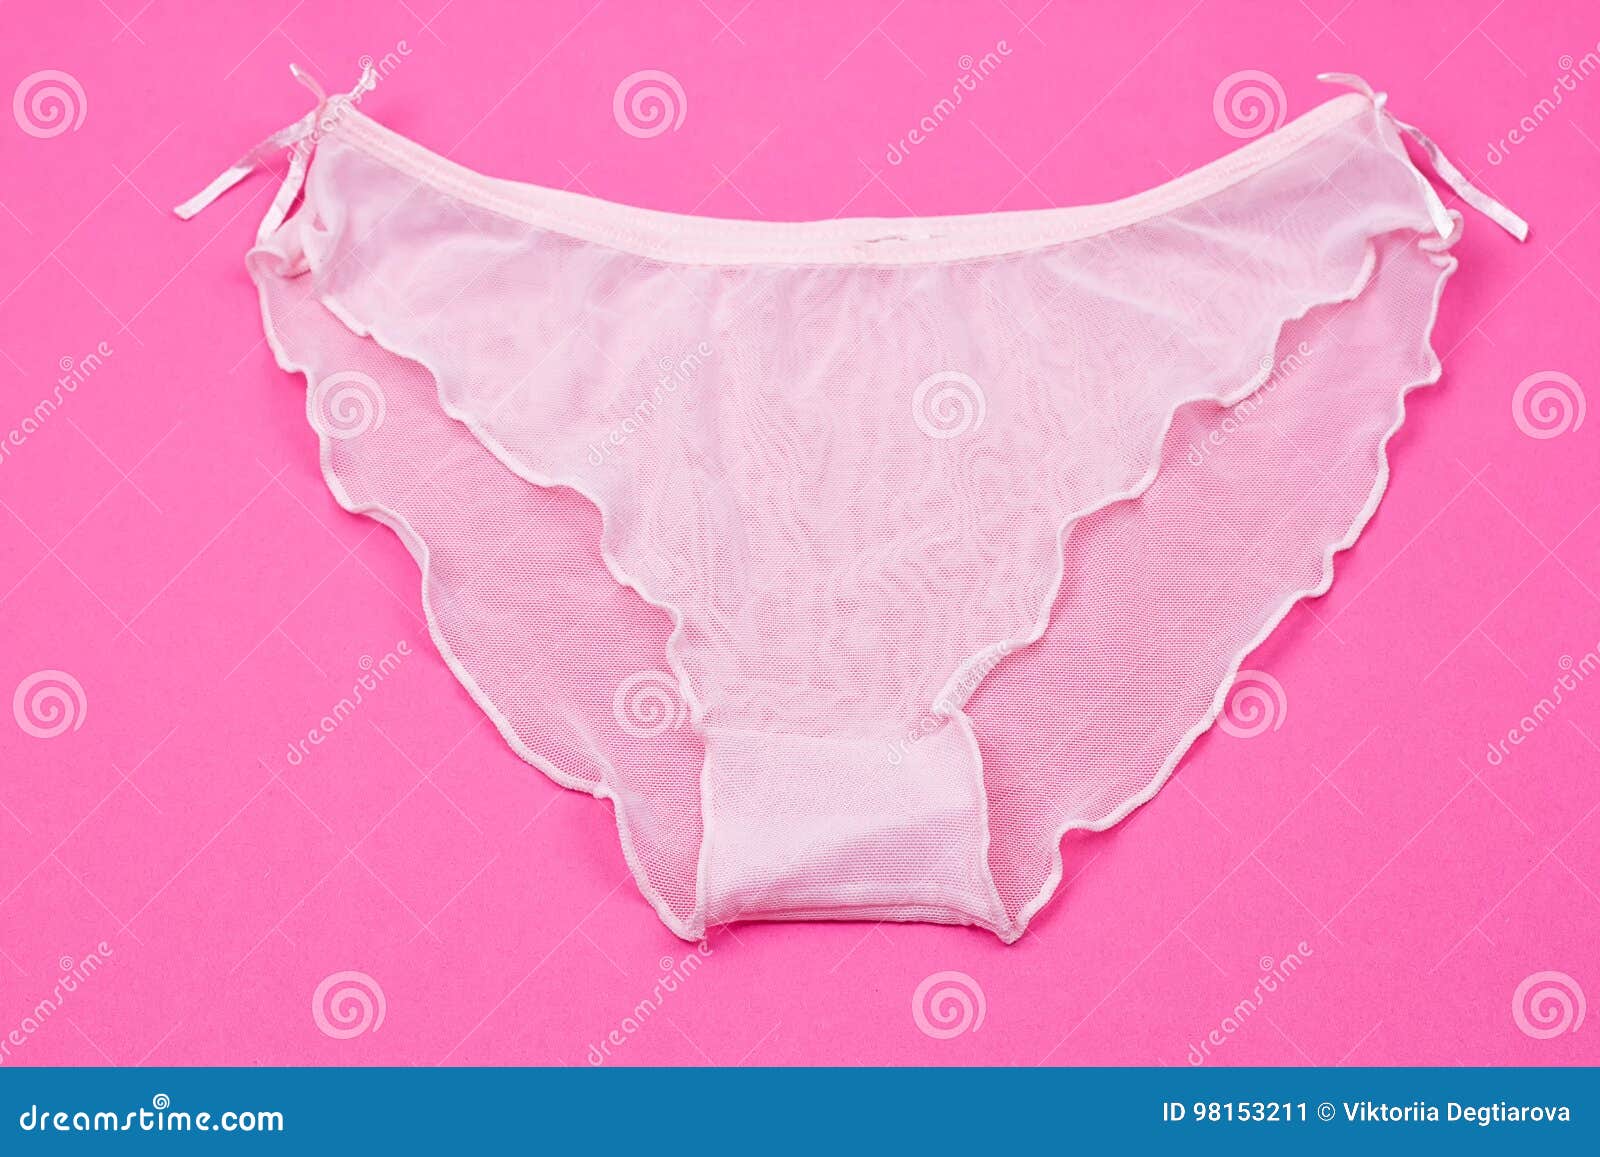 Cotton Panties Underwear Models